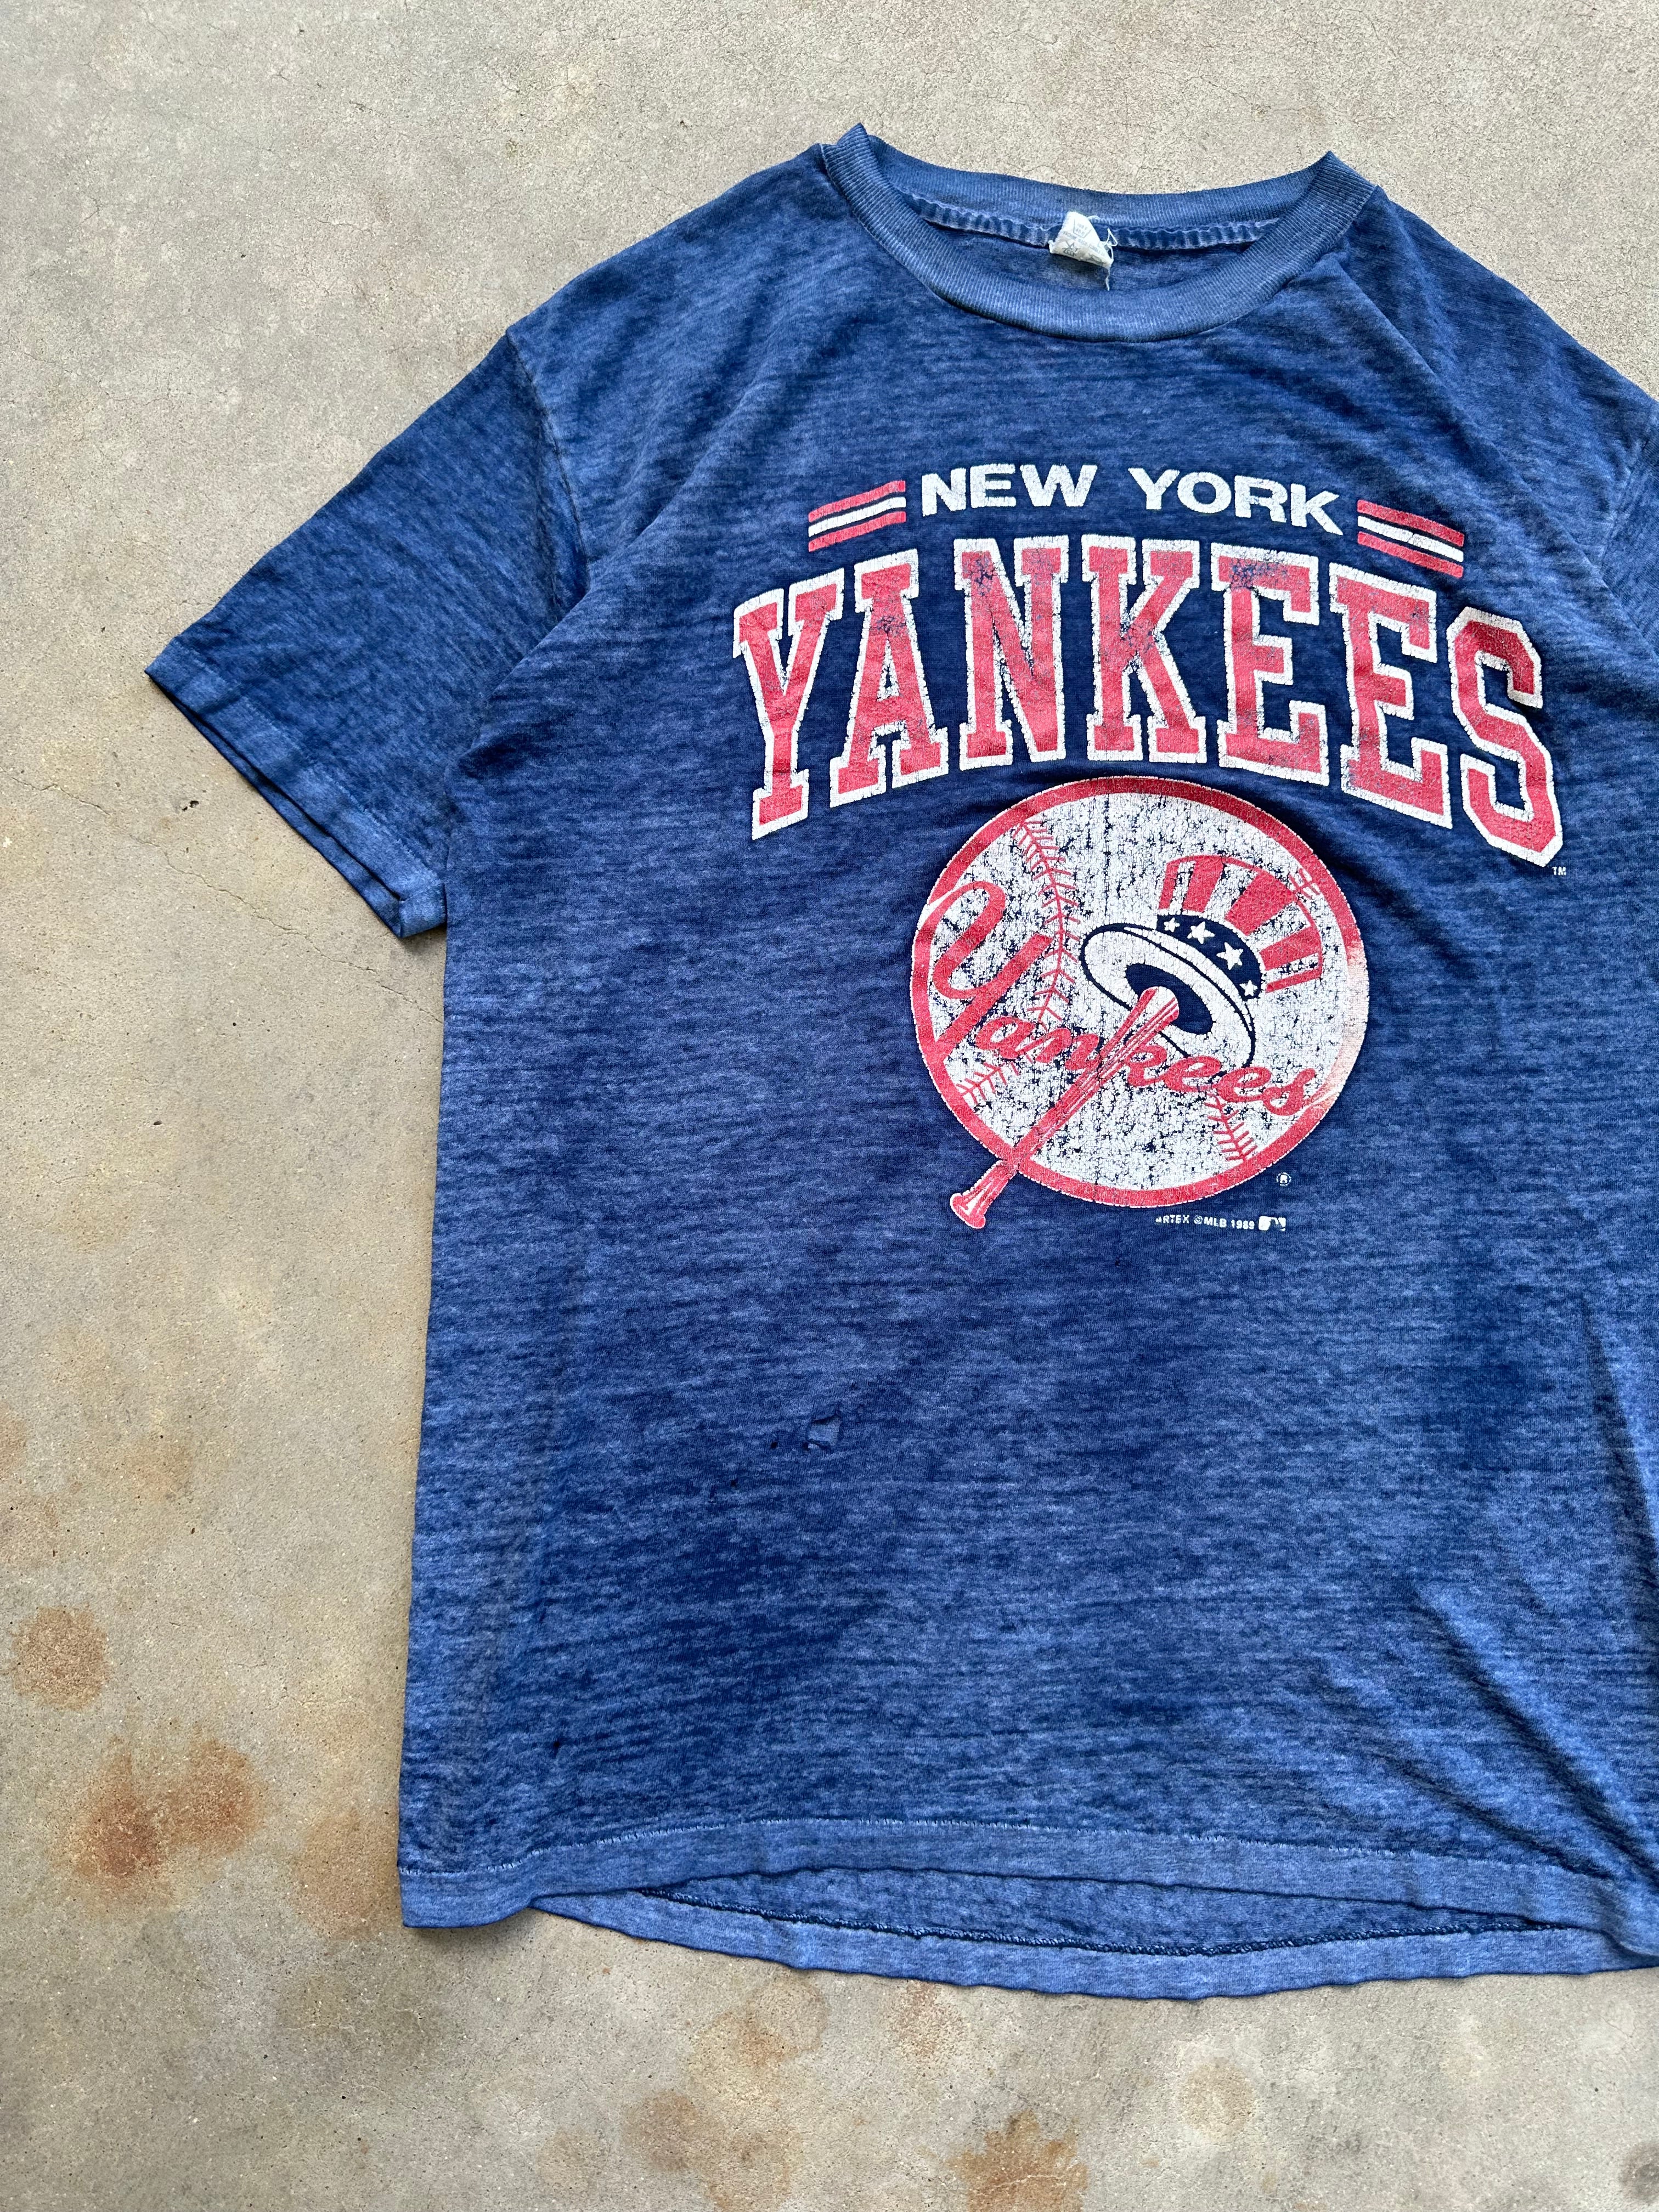 1989 Faded/Worn New York Yankees T-Shirt (M)